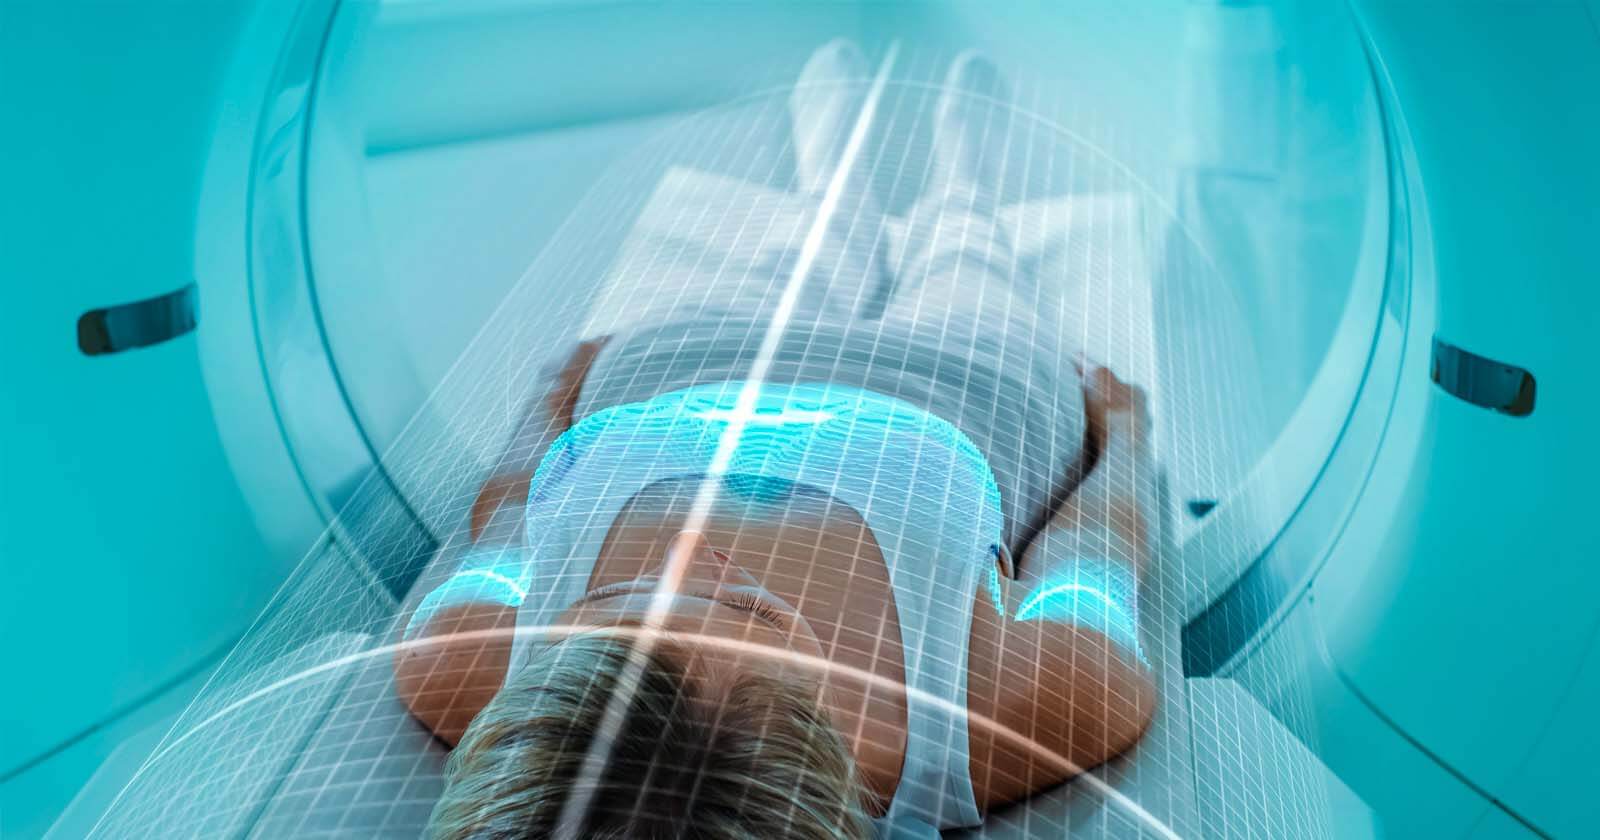 PET Scans: A High-Tech Look Inside Your Body